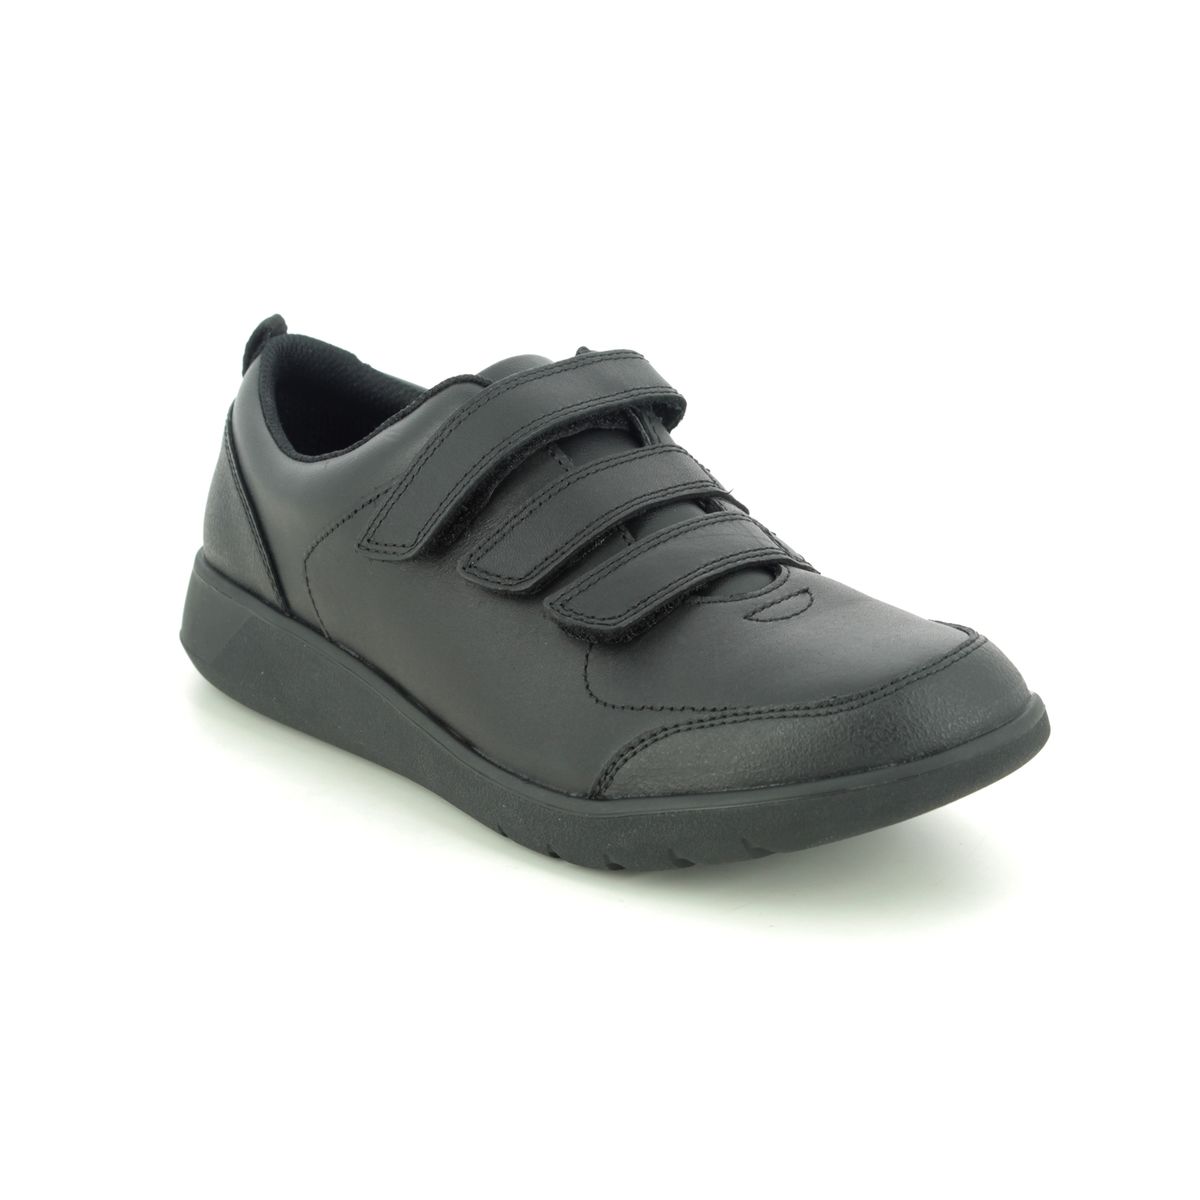 clarks black velcro school shoes